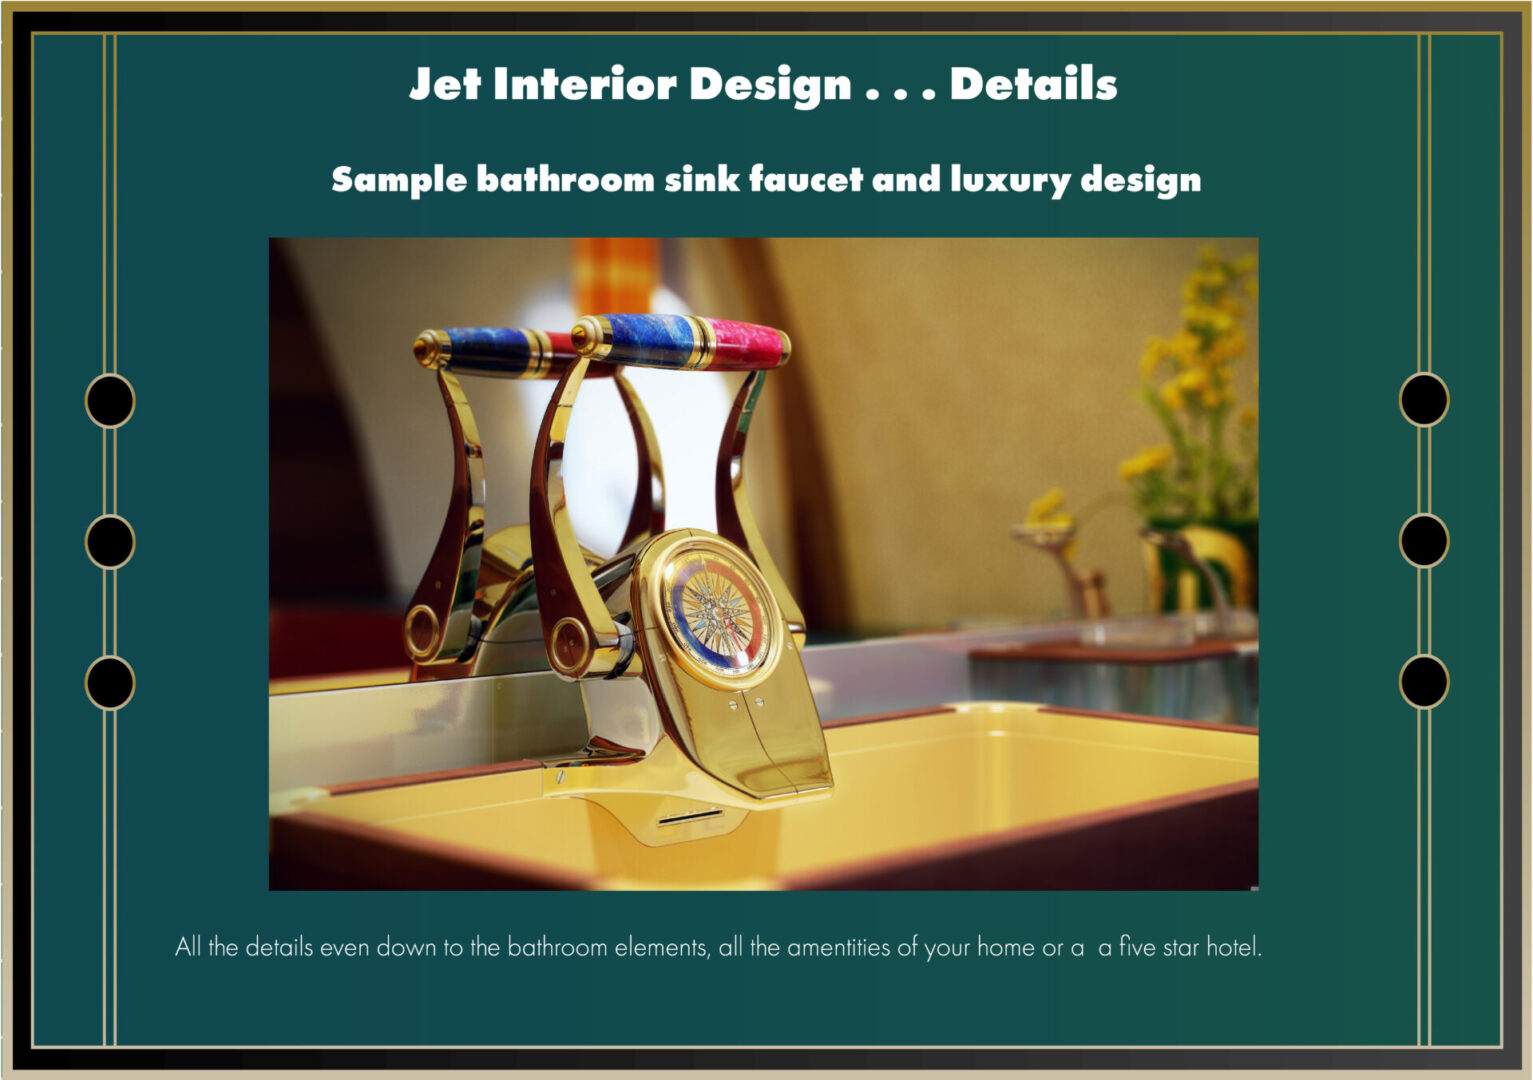 Jet Interior Design sample luxury bathroom sink faucet